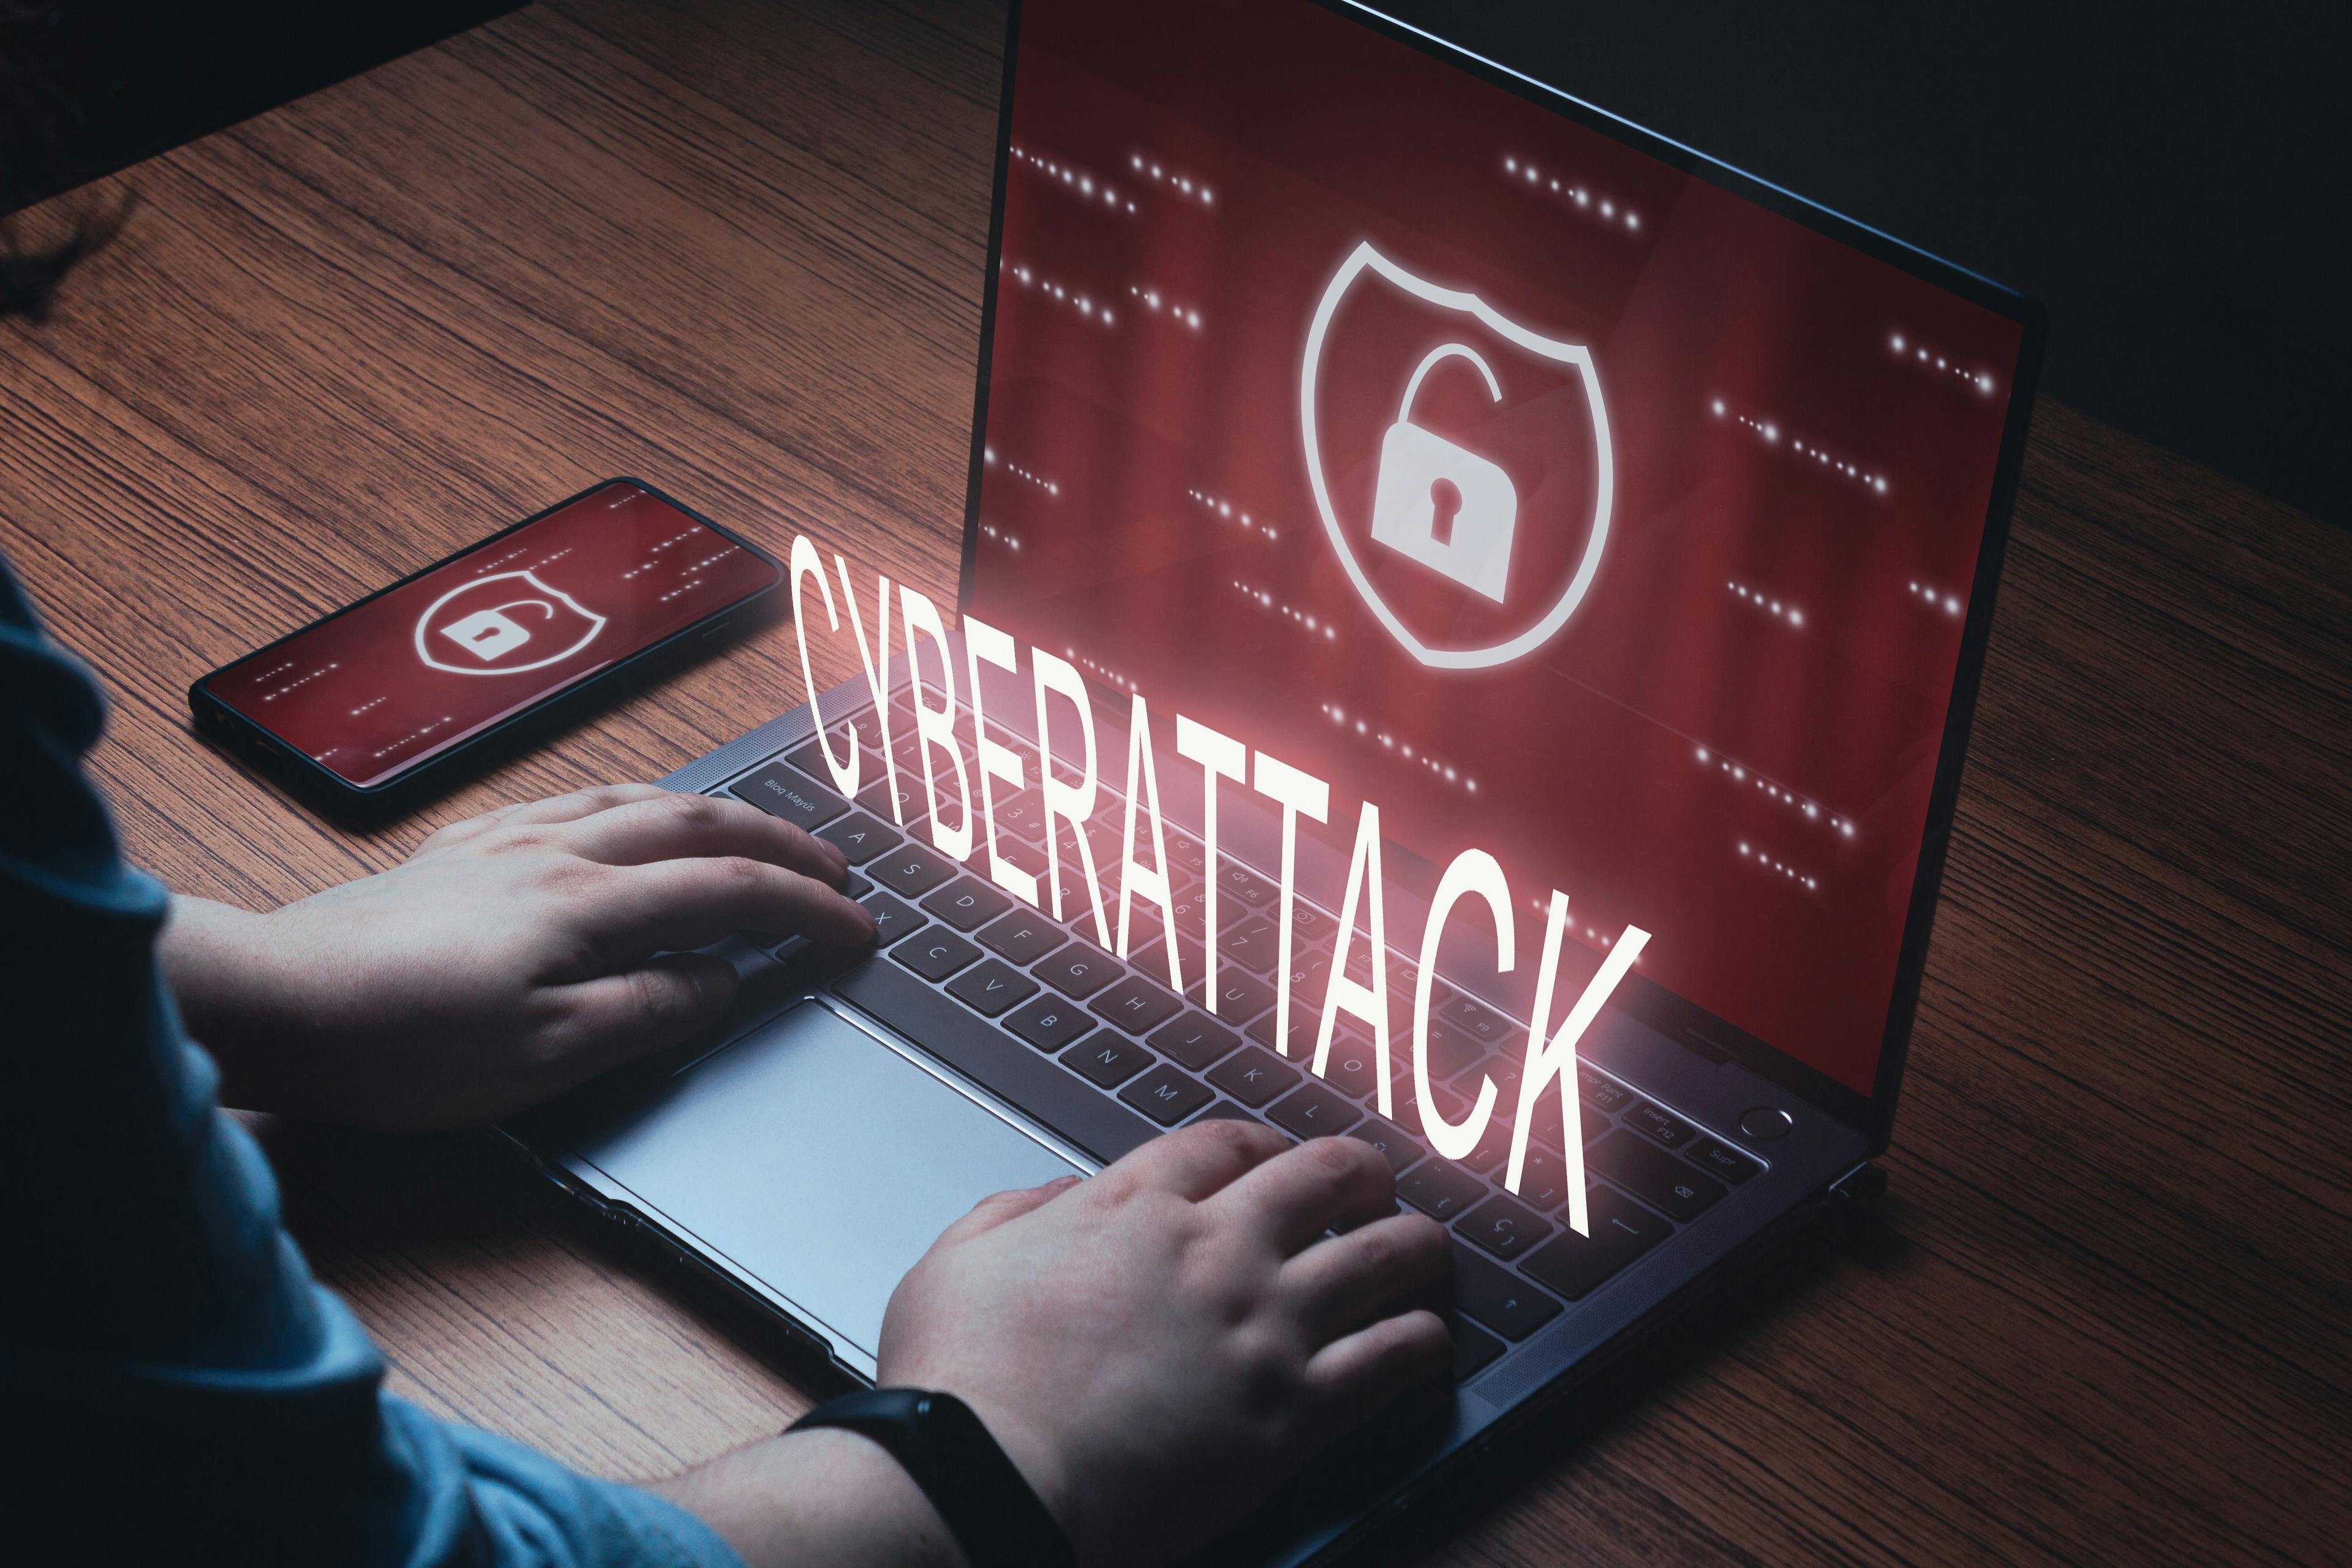 Cyberattack text on computer screen ©Elena Uve-stock.adobe.com